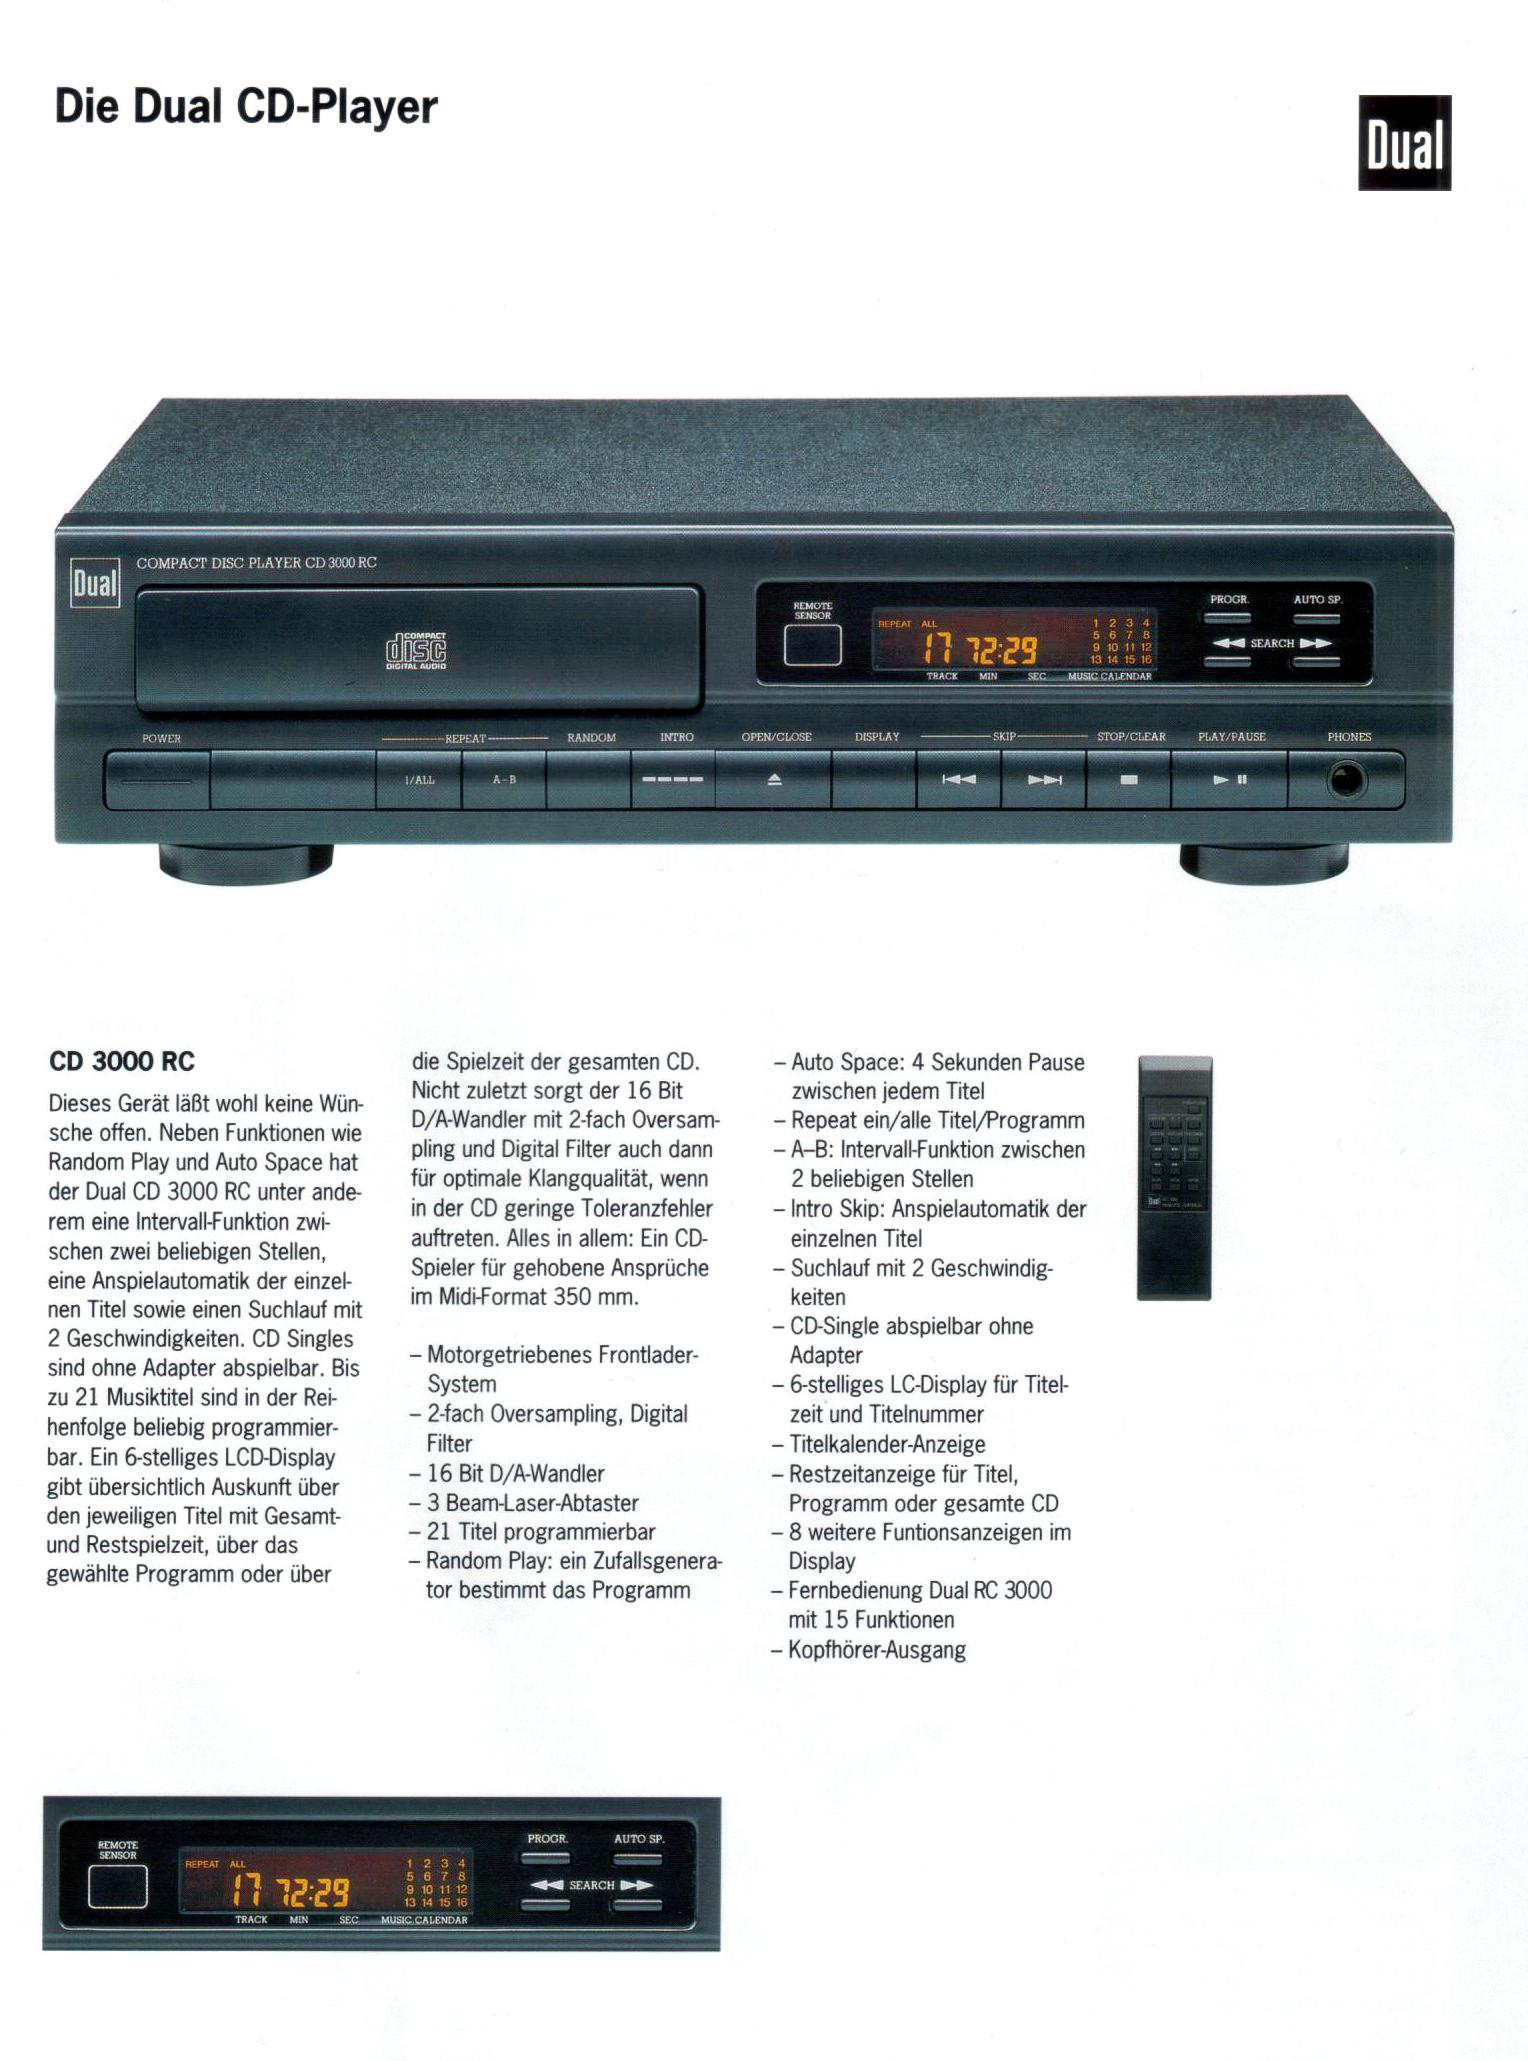 Dual CD-3000 RC-Prospekt-1993.jpg